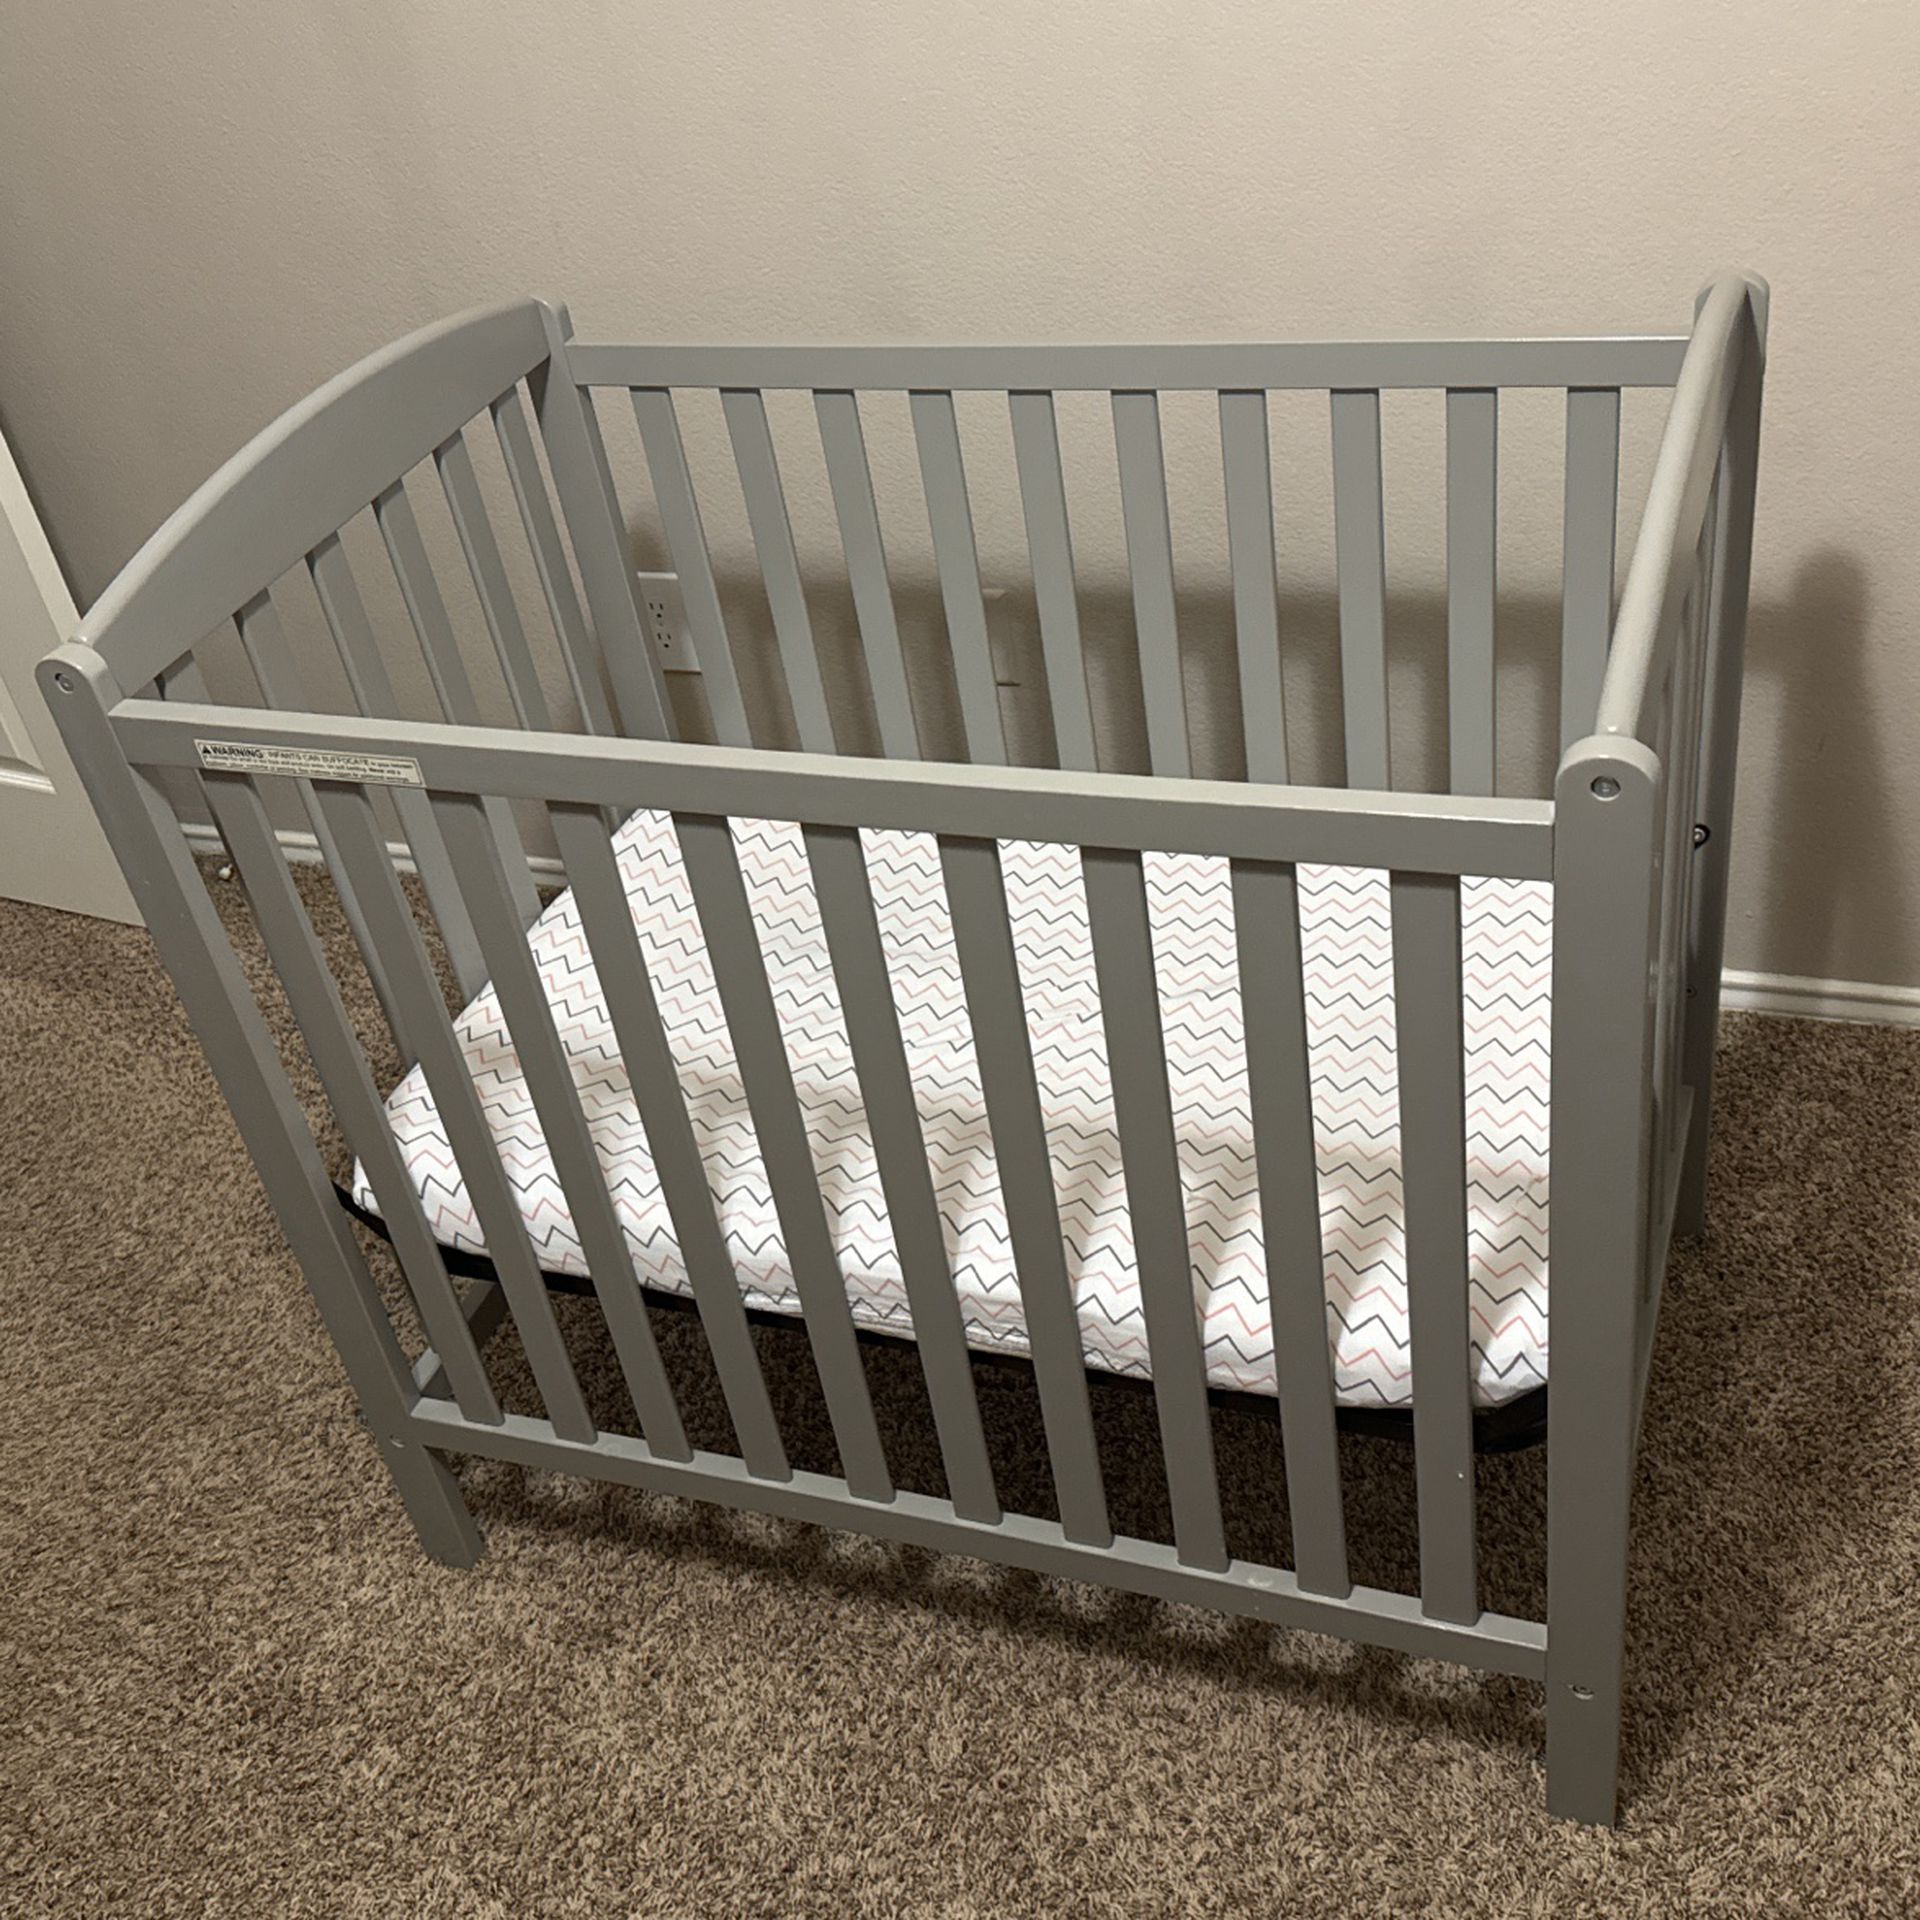 Mini Baby Crib With Mattress 